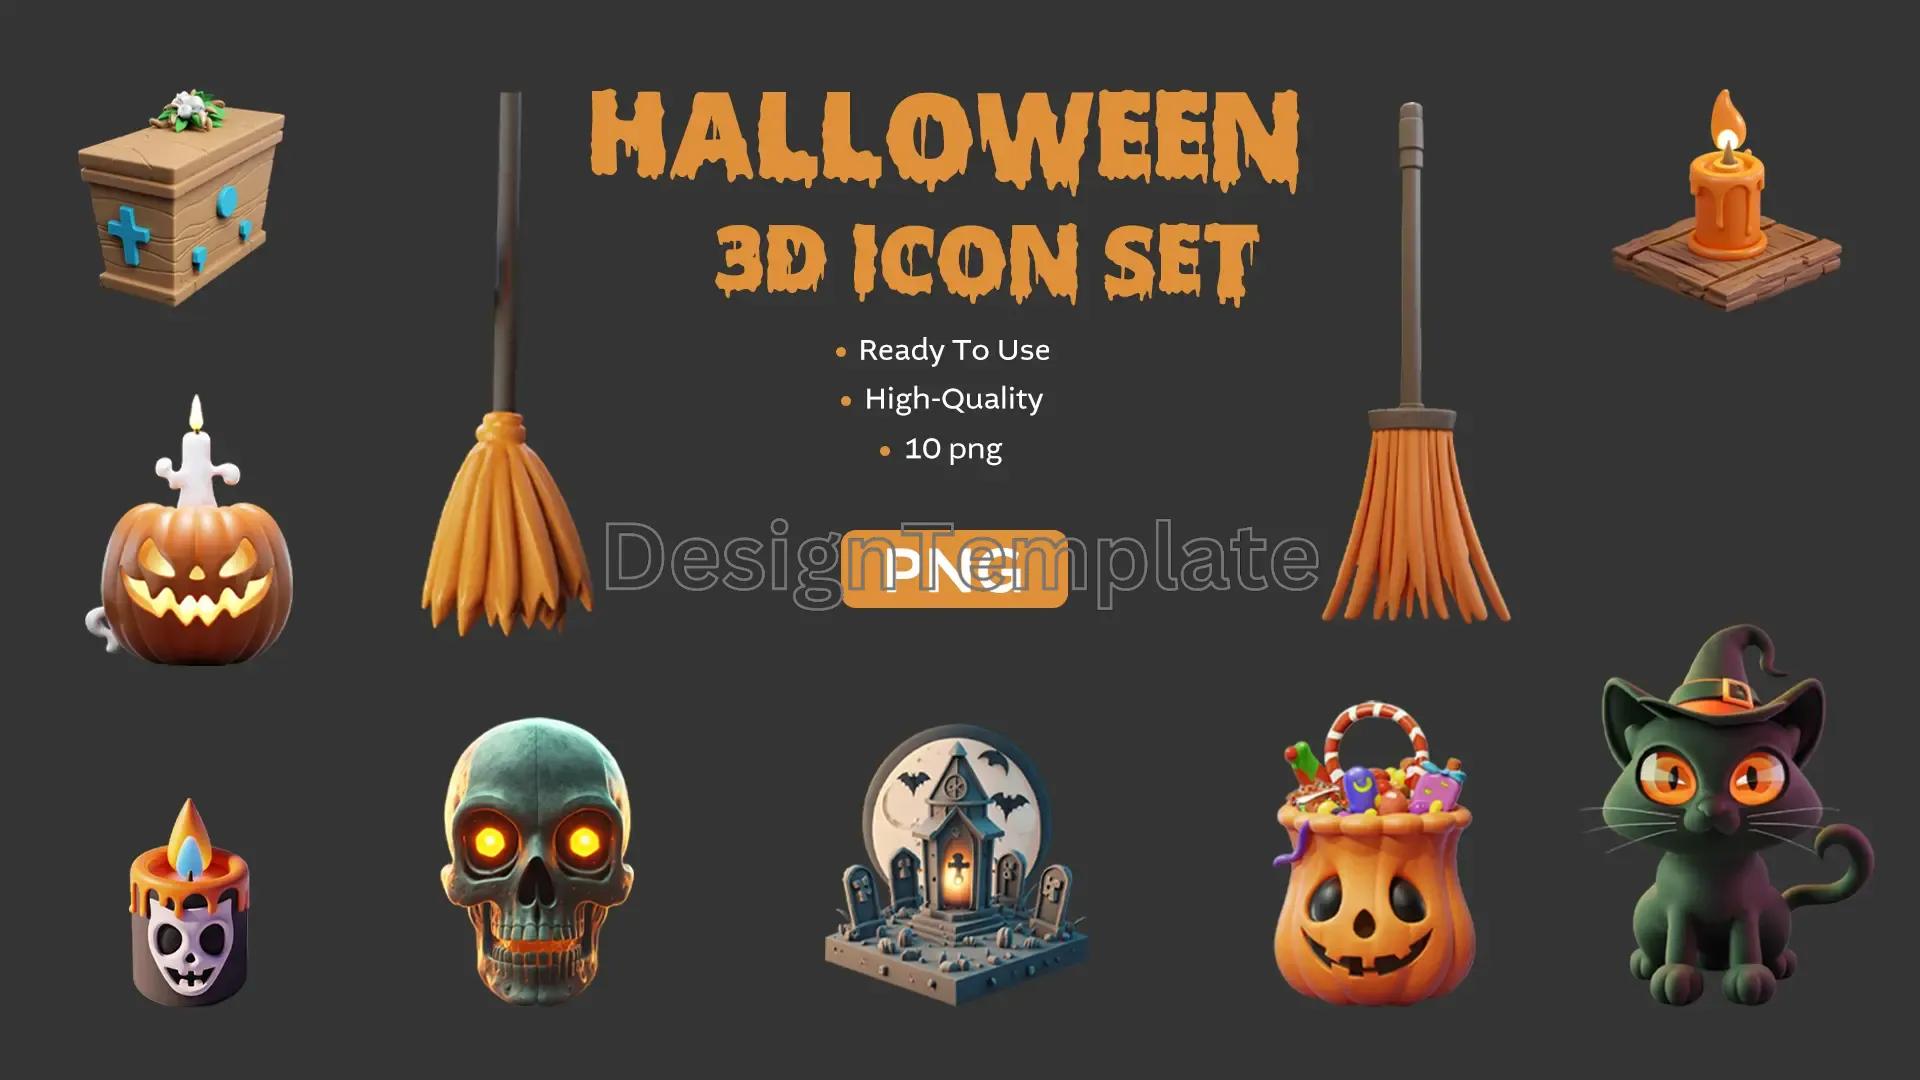 Spooky Delights Halloween 3D Elements Pack image